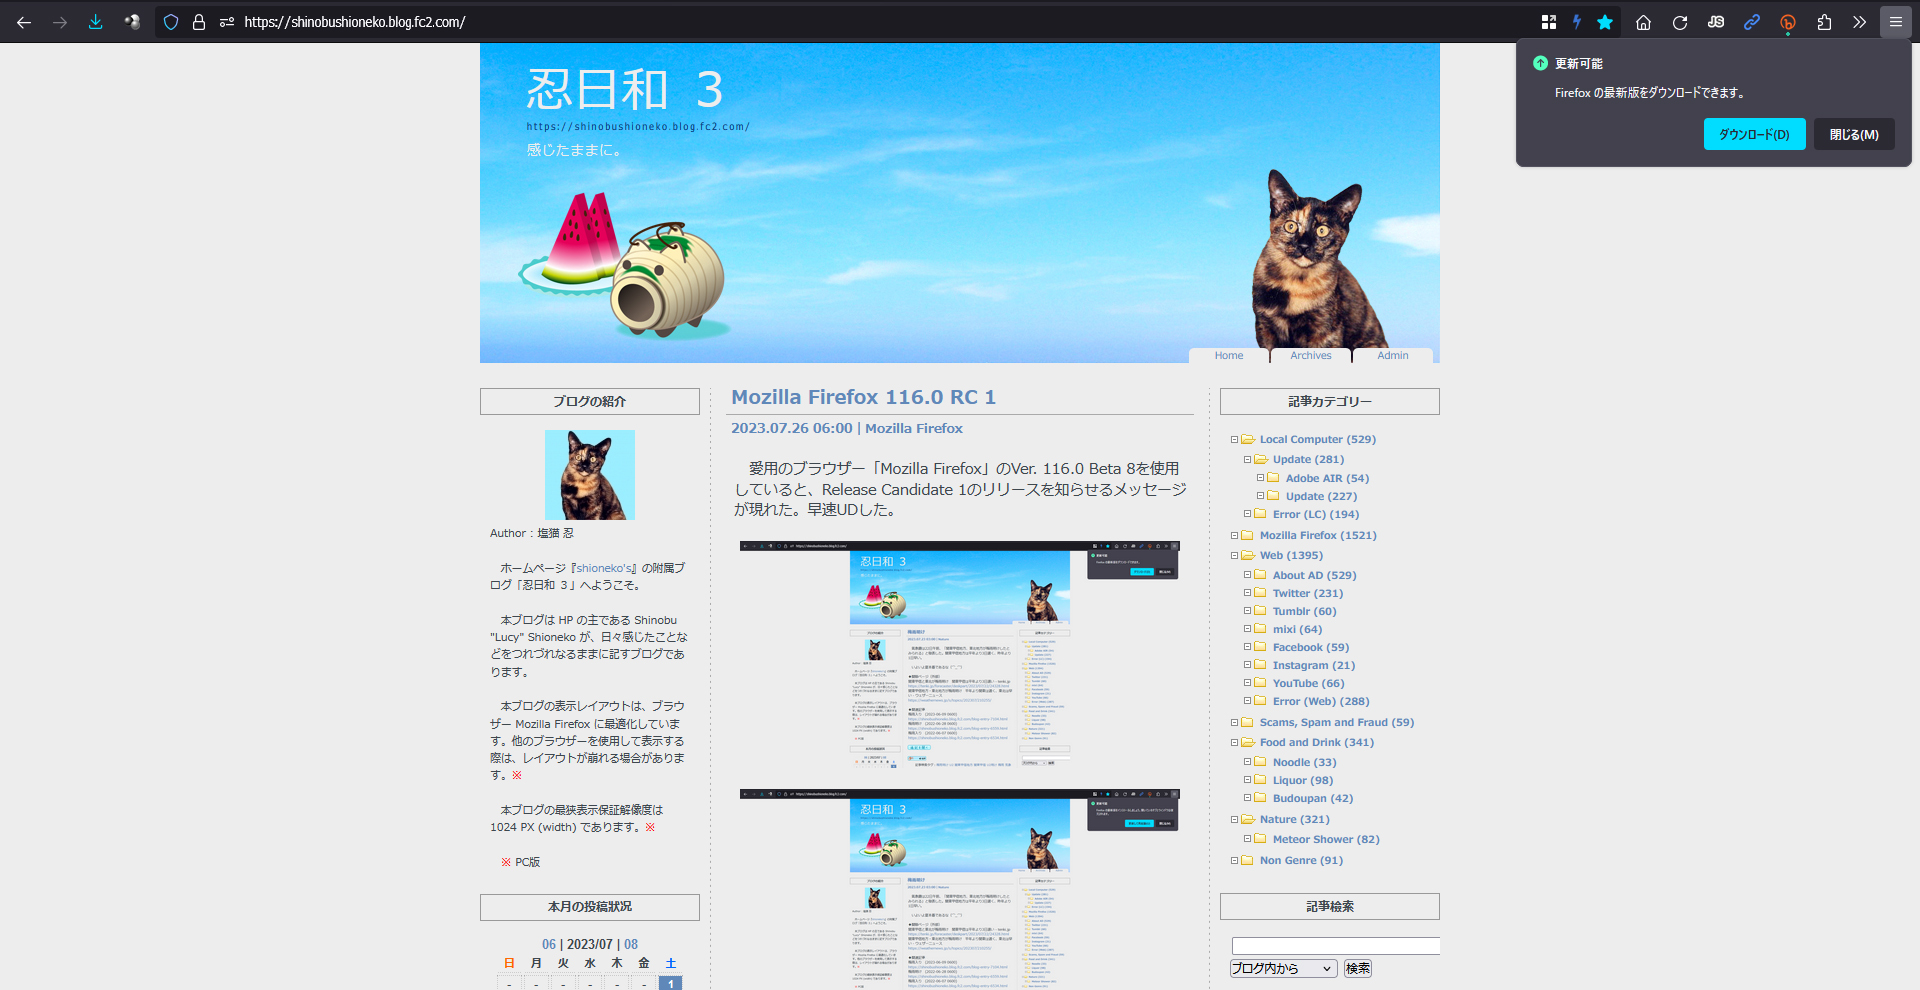 Mozilla Firefox 116.0 RC 2